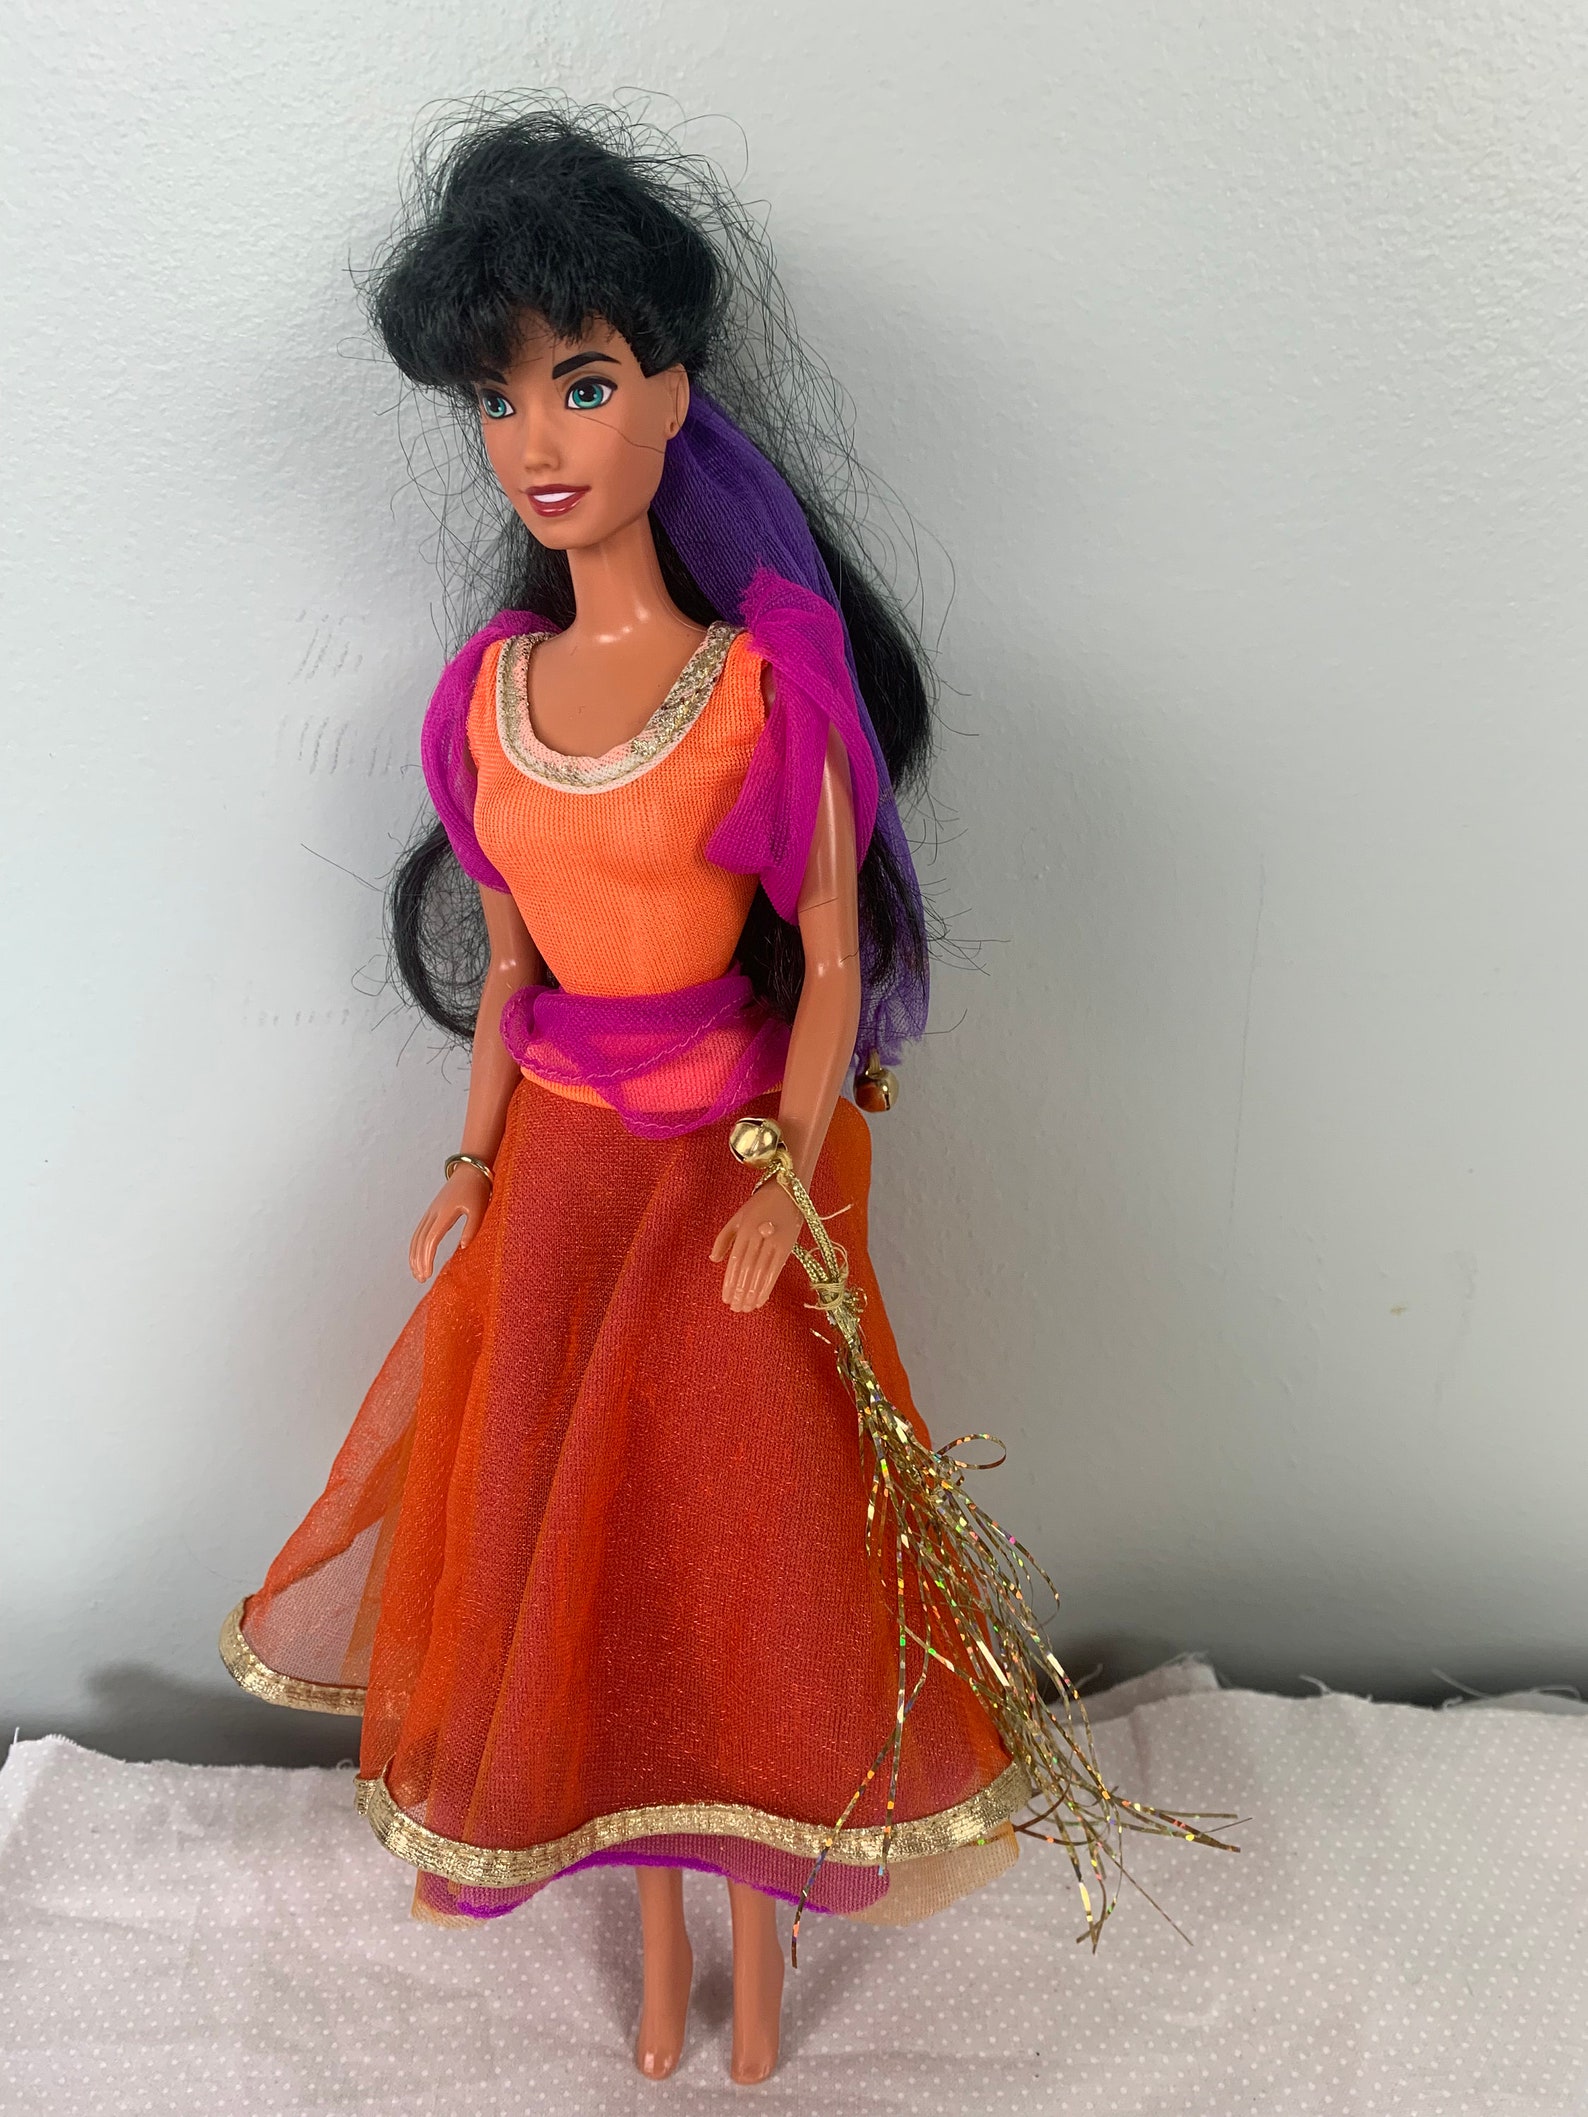 Vintage 1990s Disney Esmeralda Barbie Doll by Mattel | Etsy